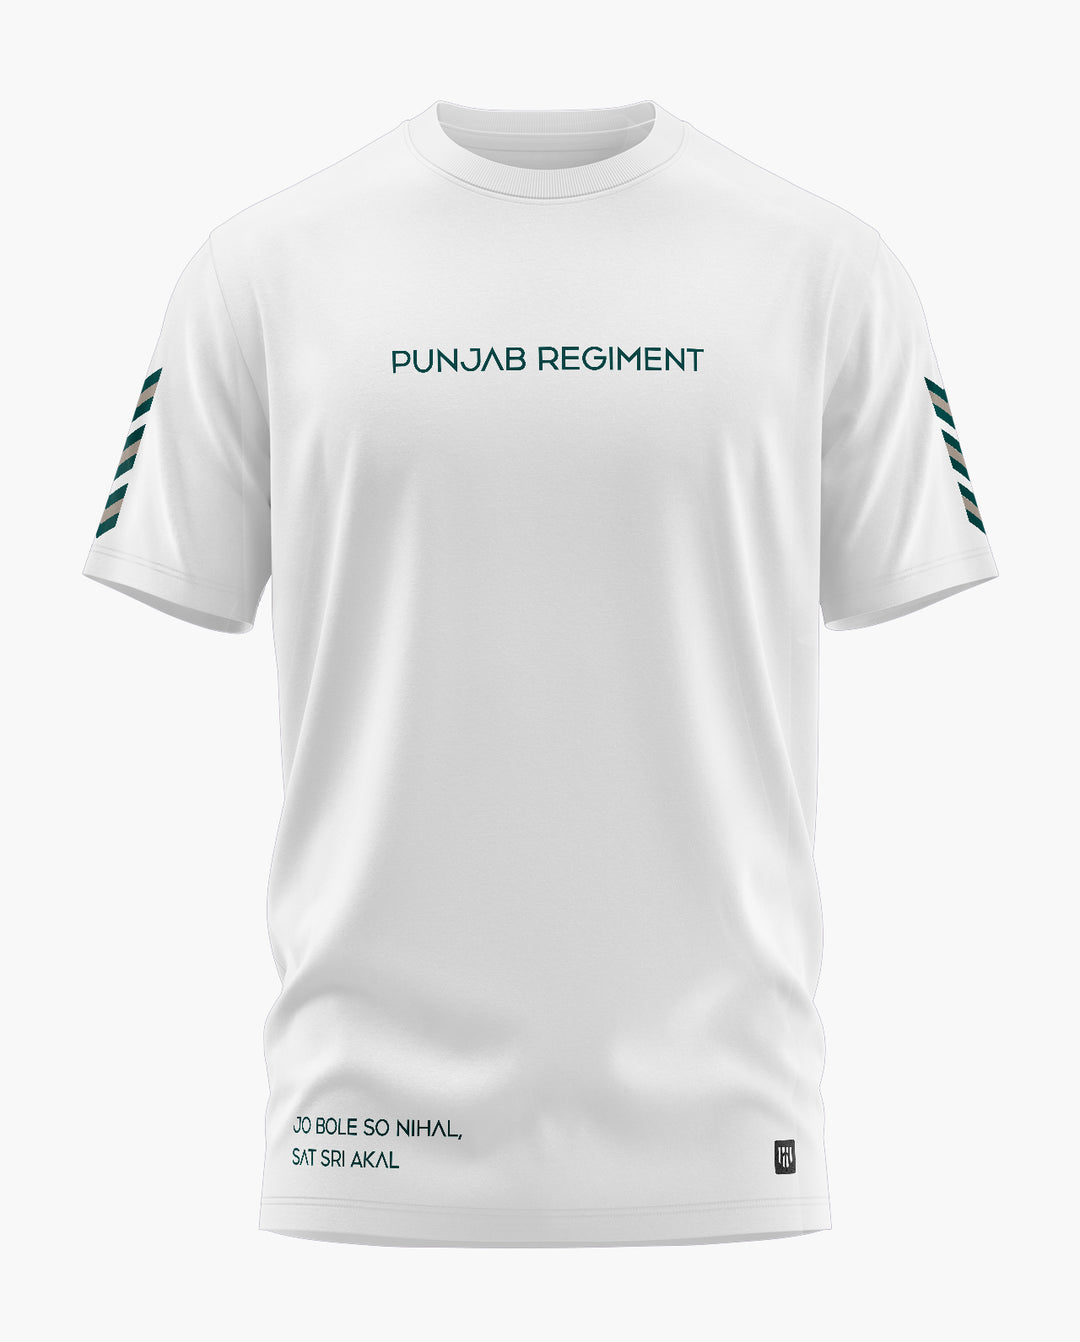 PUNJAB REGIMENT T-Shirt